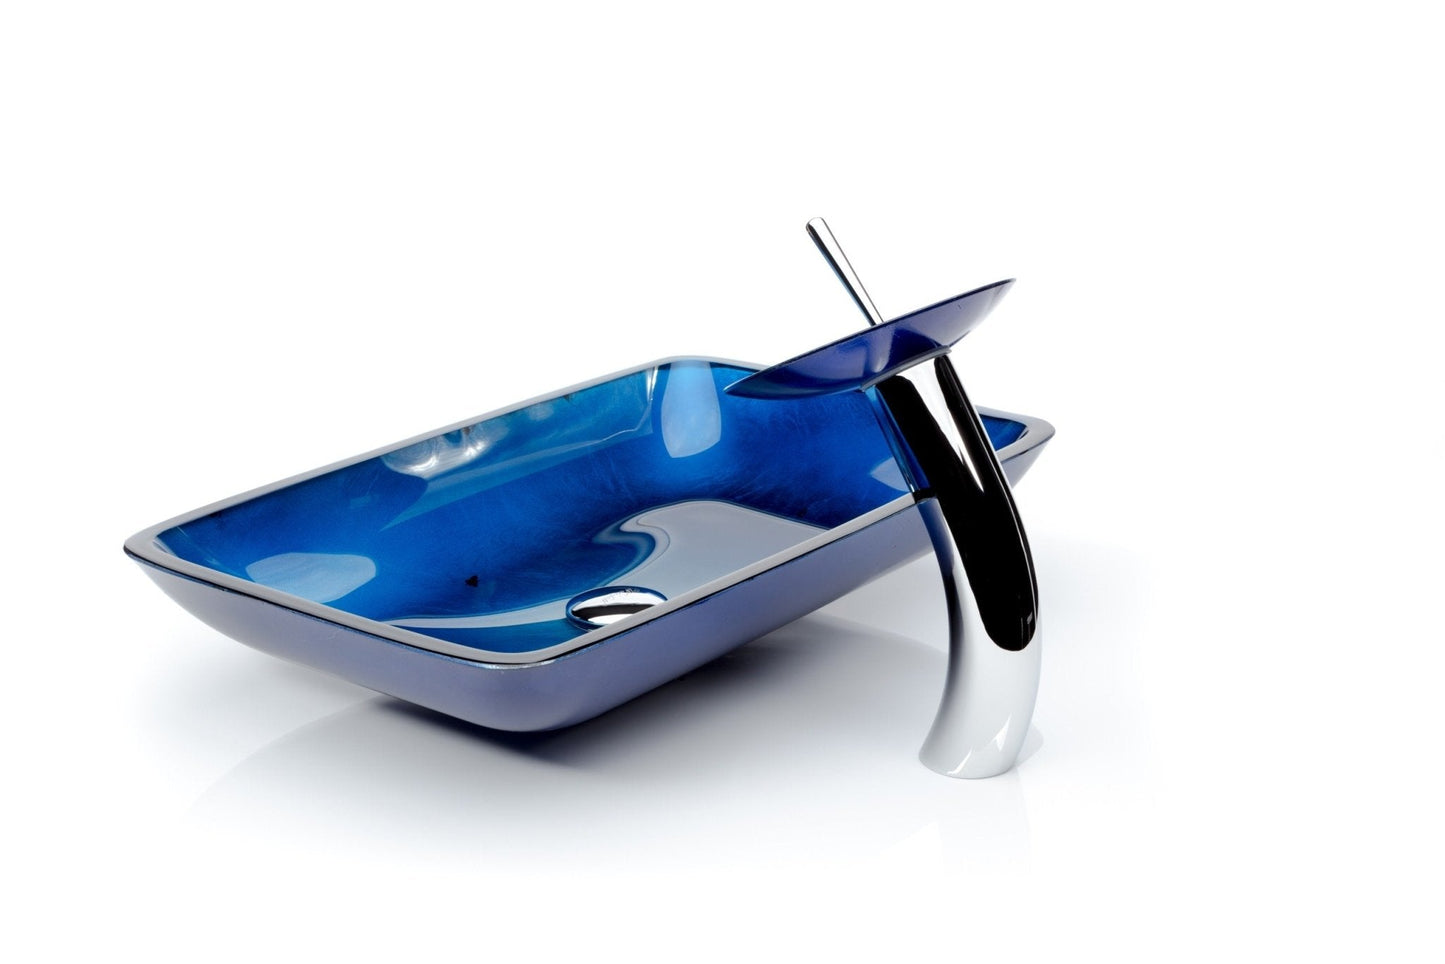 Blue Rectangle Waterfall® Faucet Bathroom Sink Combo - |VESIMI Design| Luxury Bathrooms & Deco